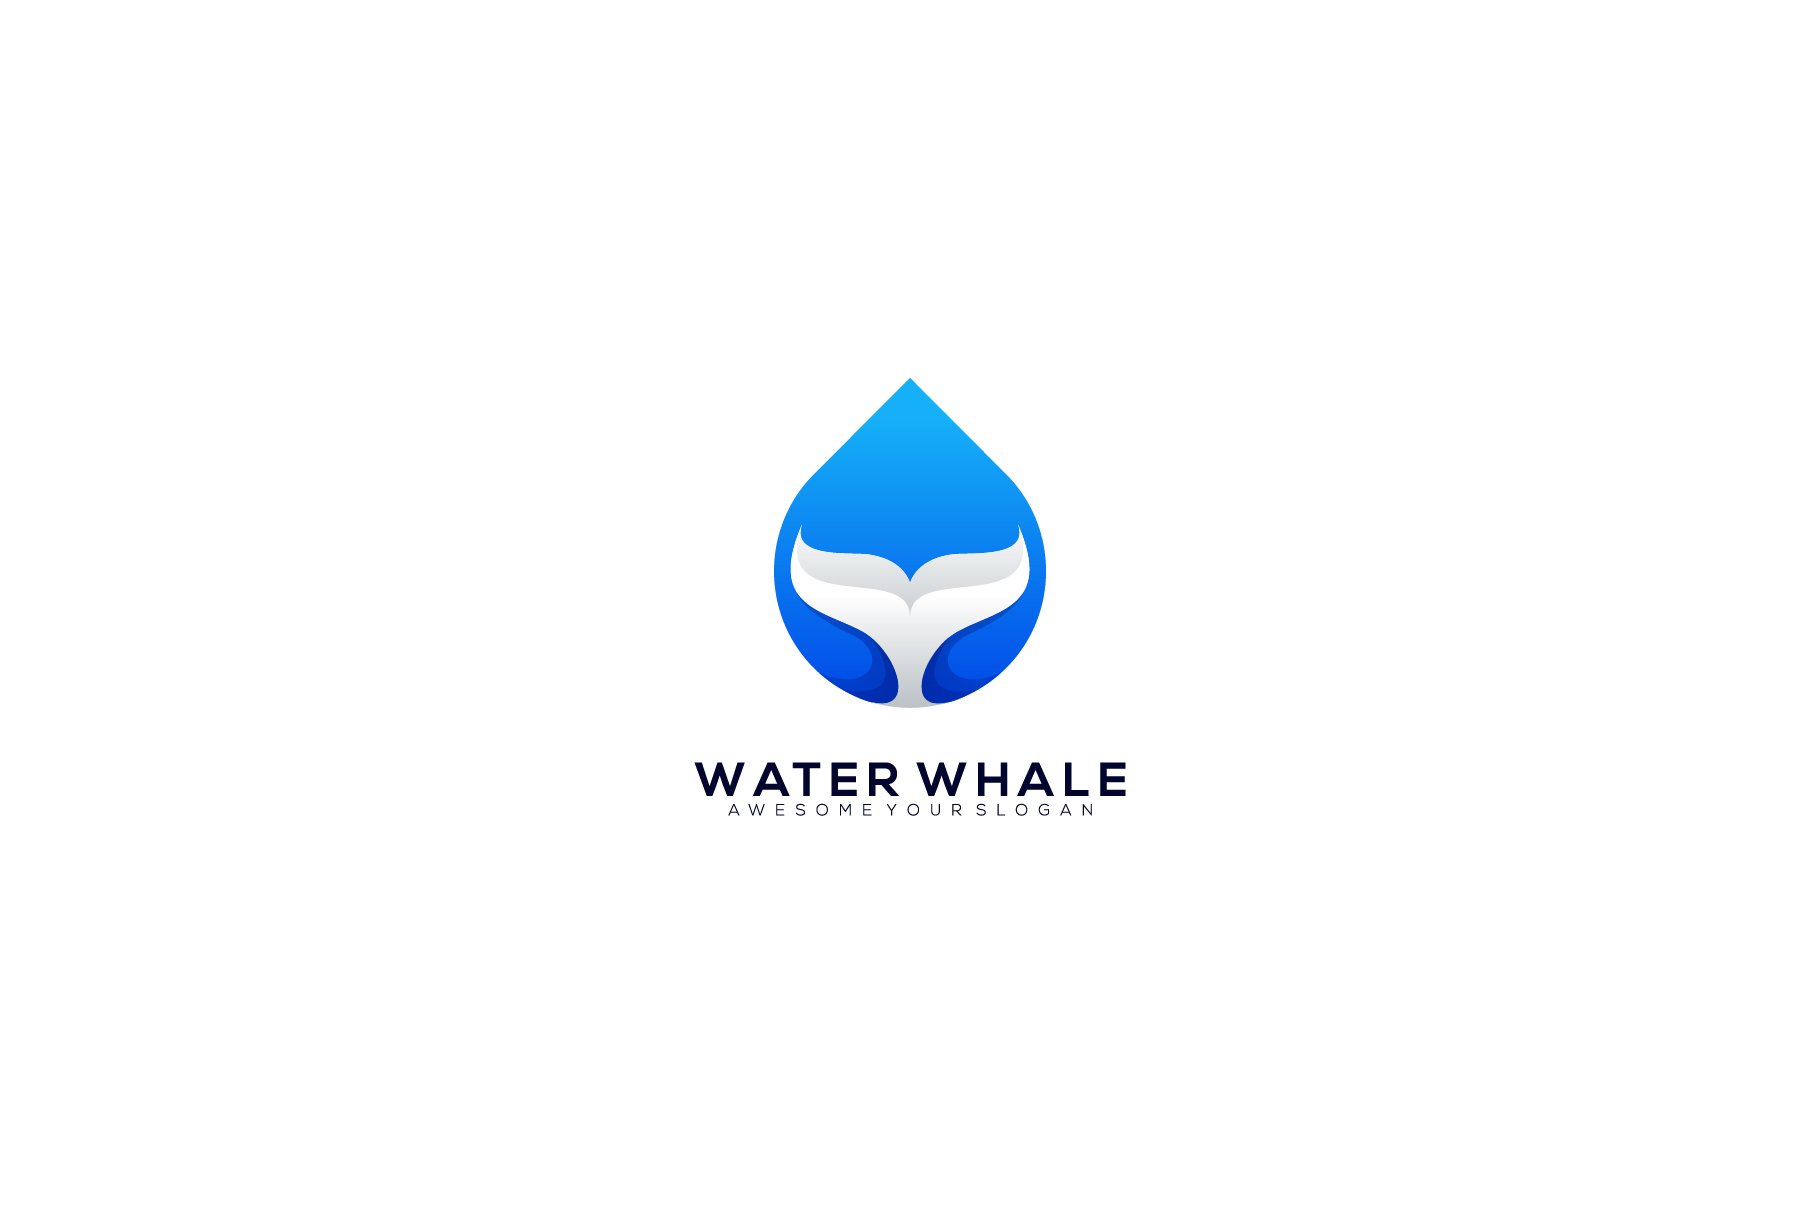 Water whale vector logo design logo cover image.